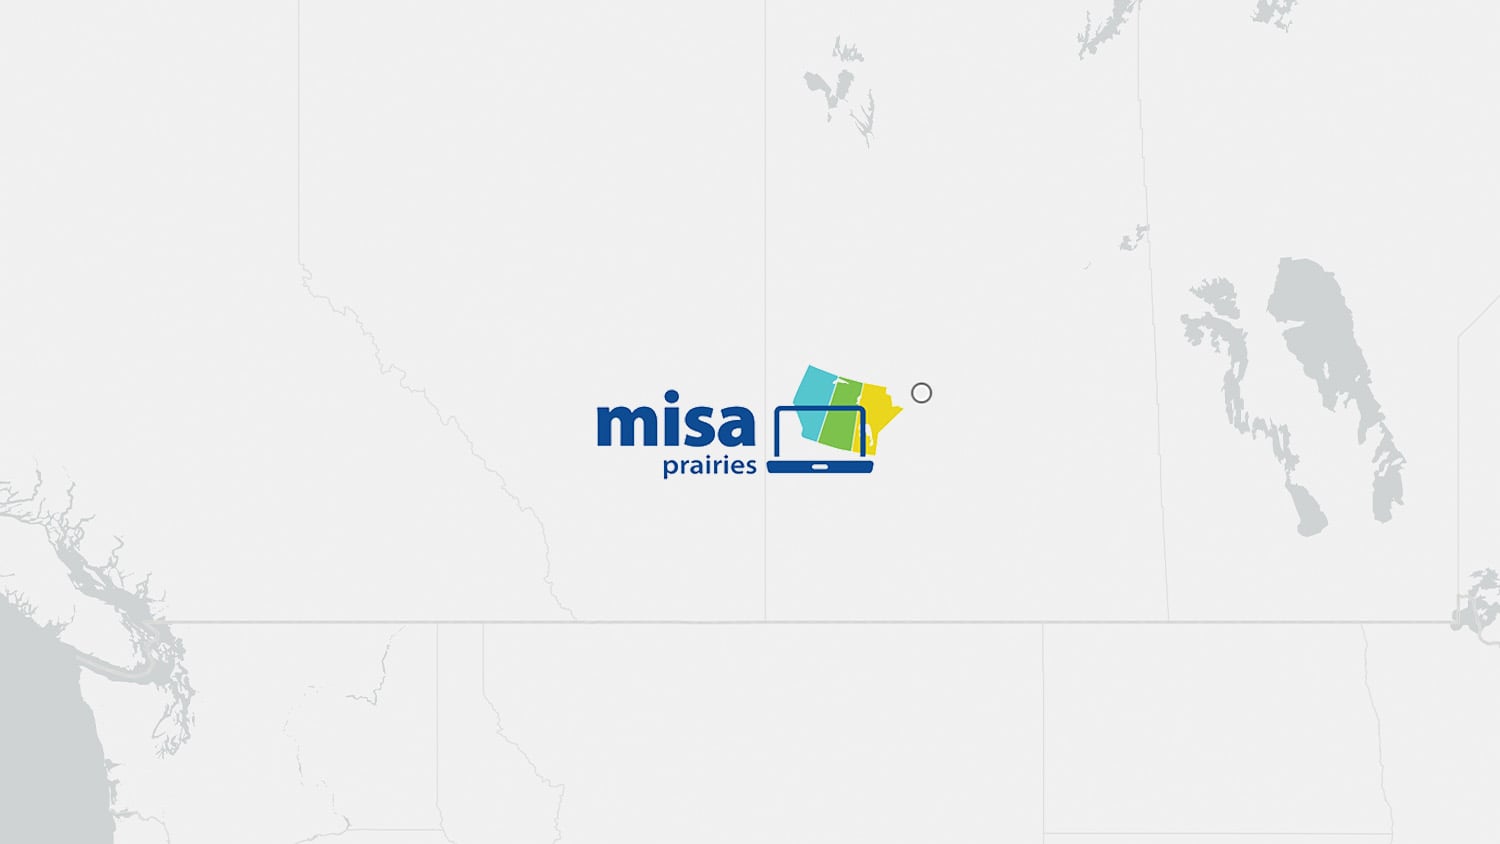 Municipal Information Systems Association MISA Prairies Annual Conference & Trade Show logo and location map Saskatoon, Saskatchewan, Canada